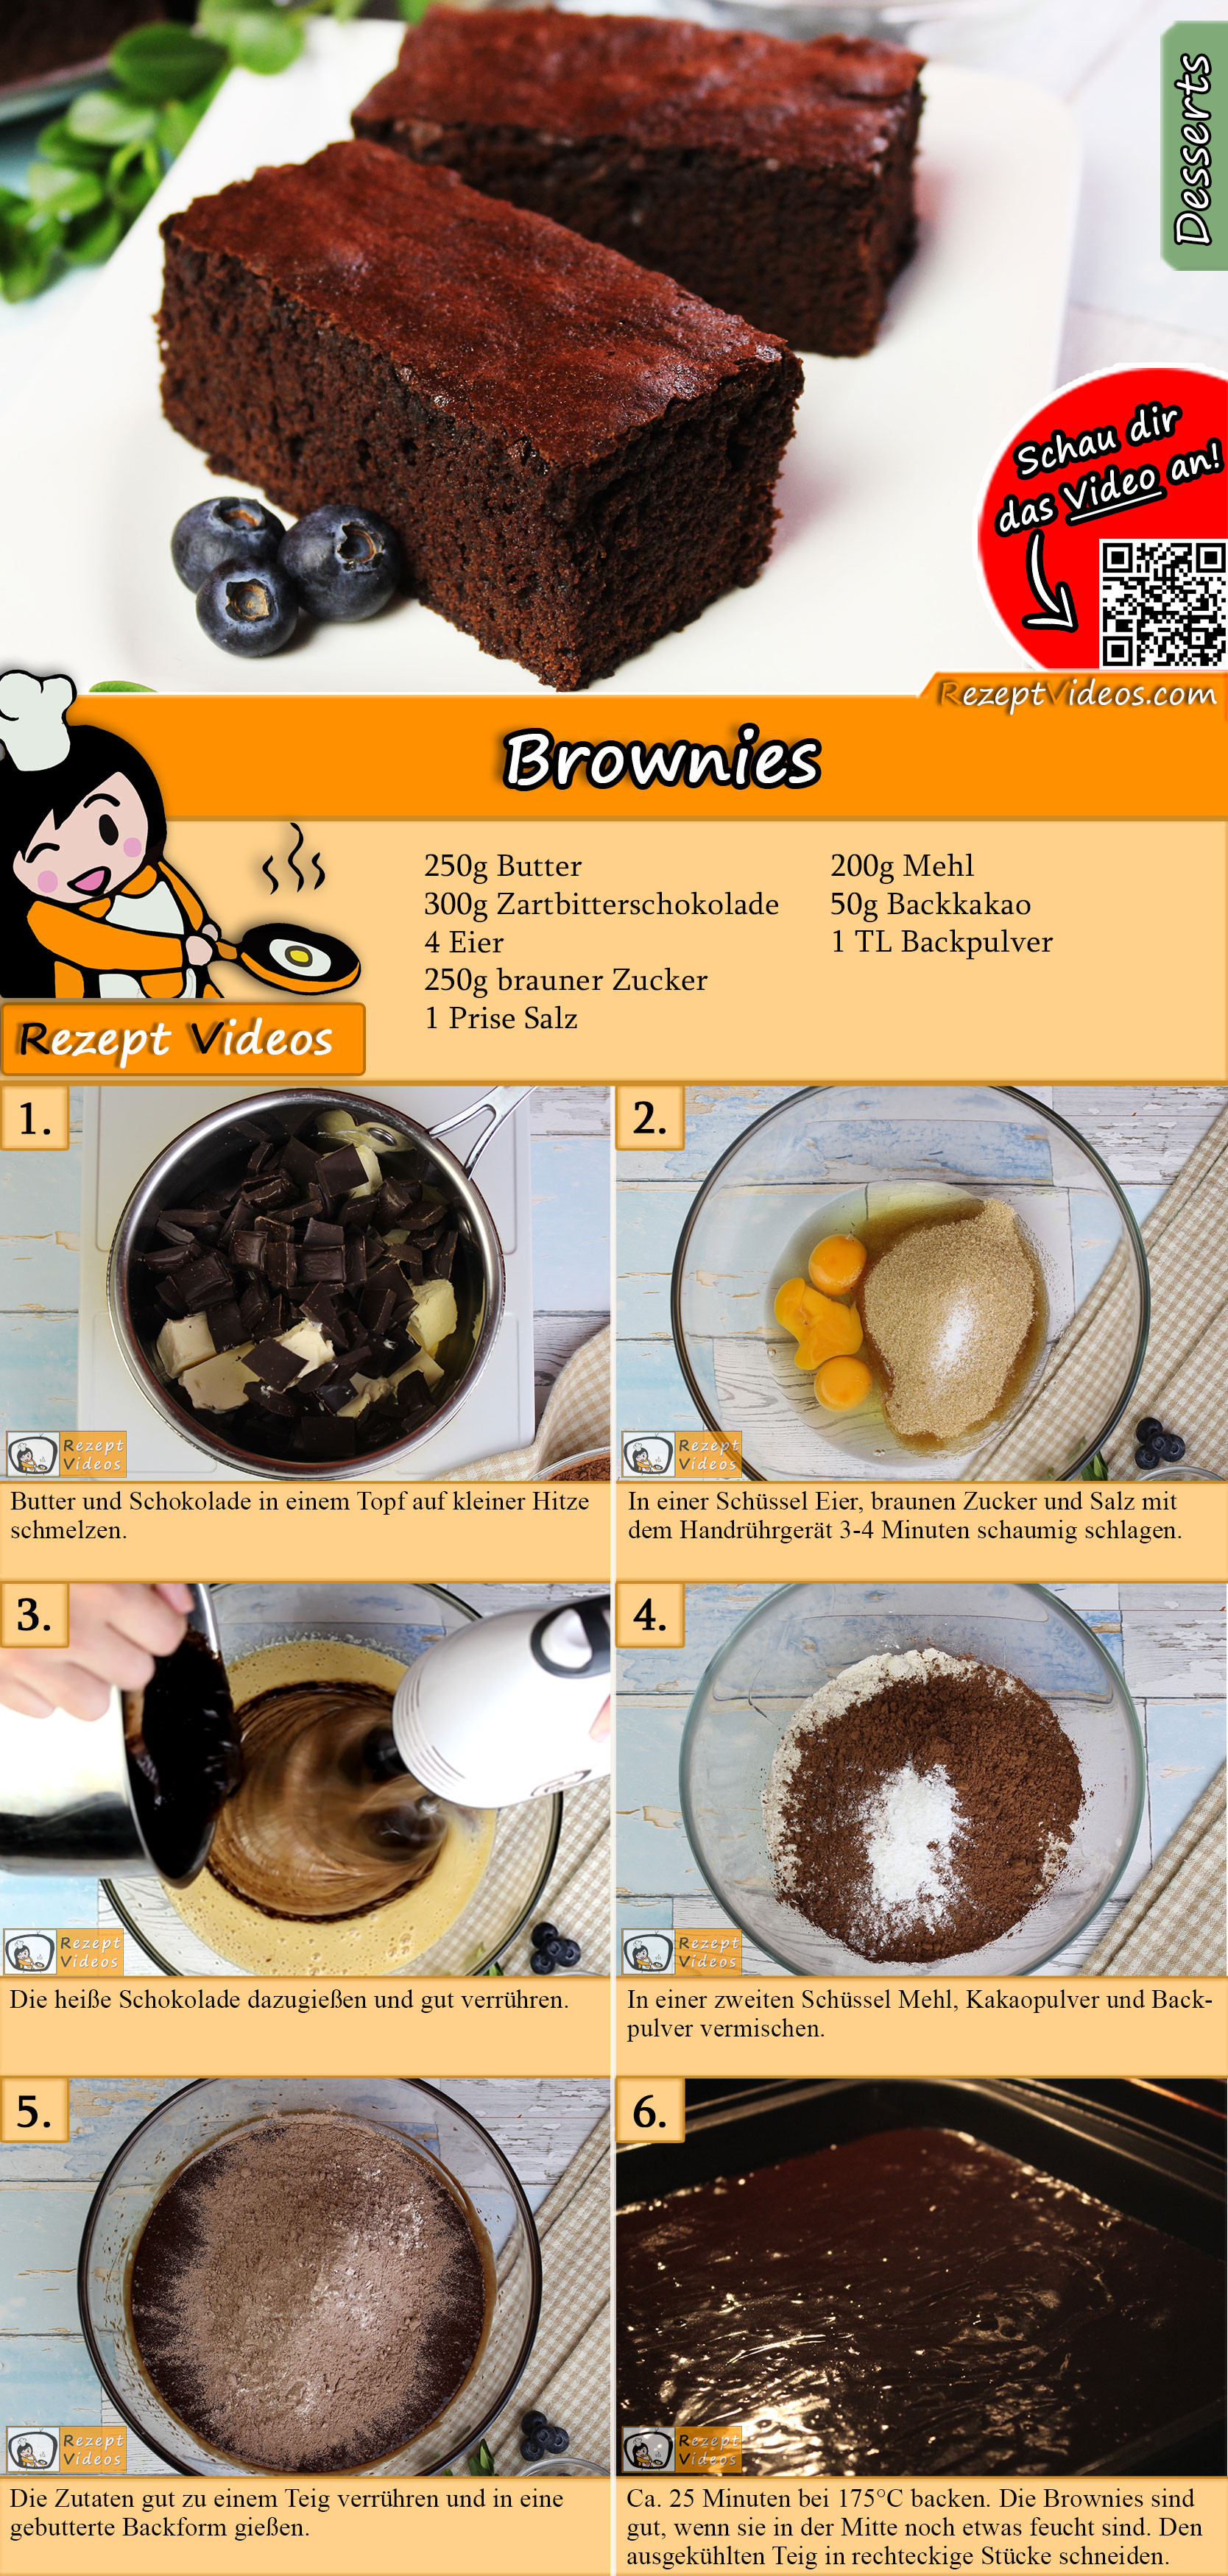 Brownies Rezept mit Video